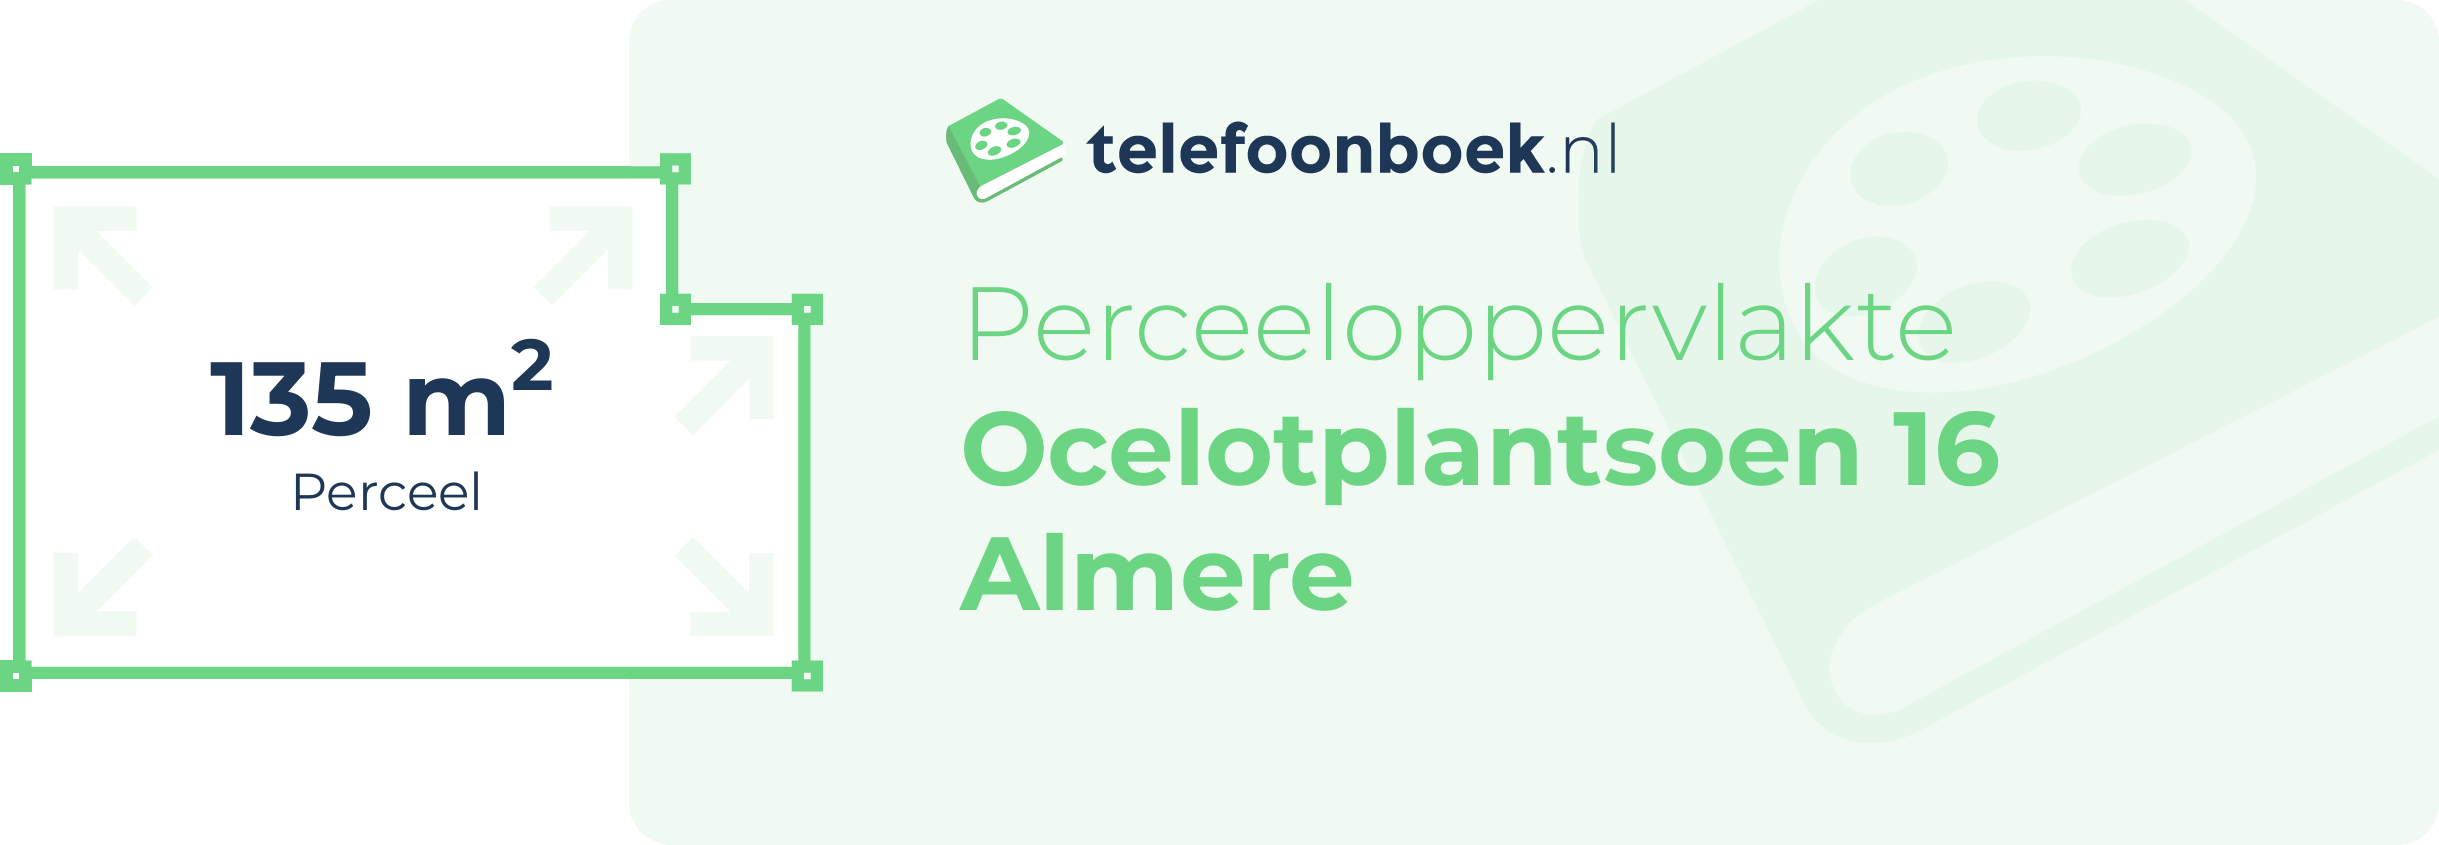 Perceeloppervlakte Ocelotplantsoen 16 Almere